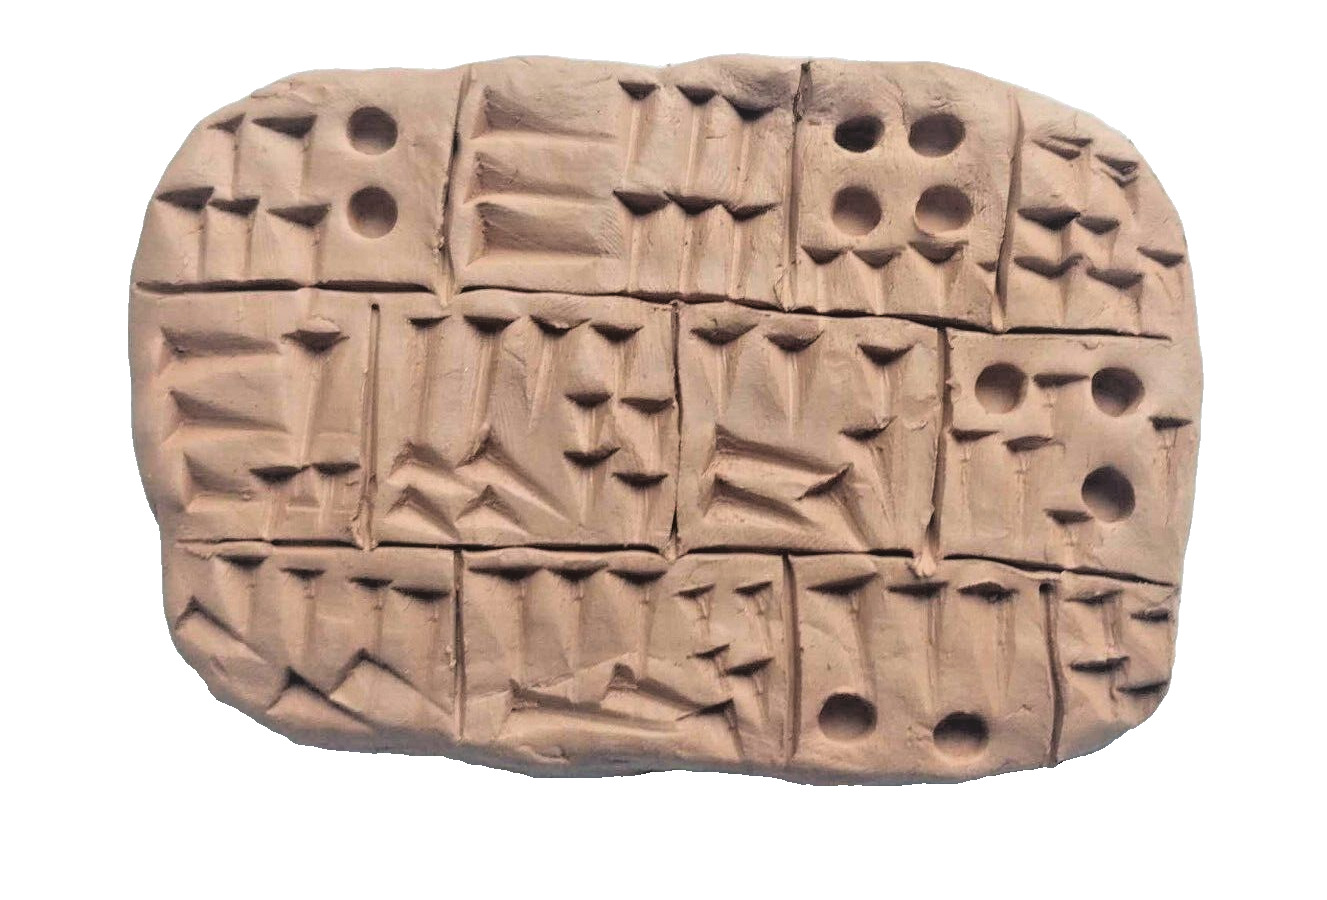 Cuneiform Tablet (replica)